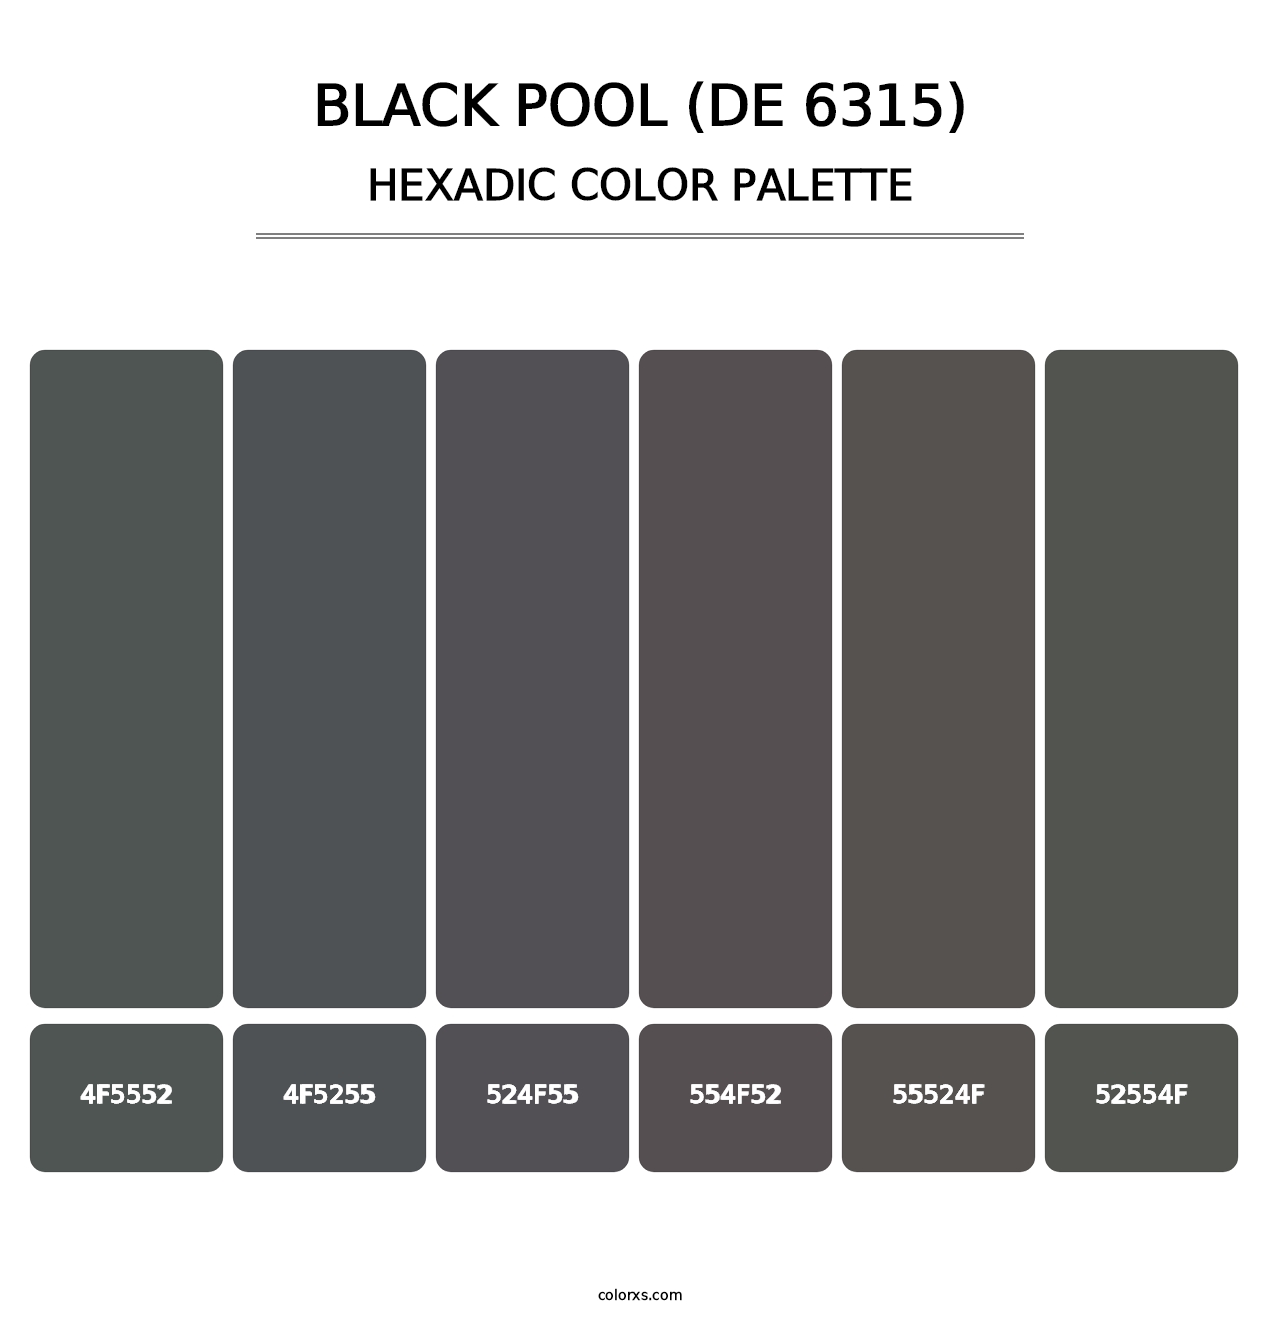 Black Pool (DE 6315) - Hexadic Color Palette